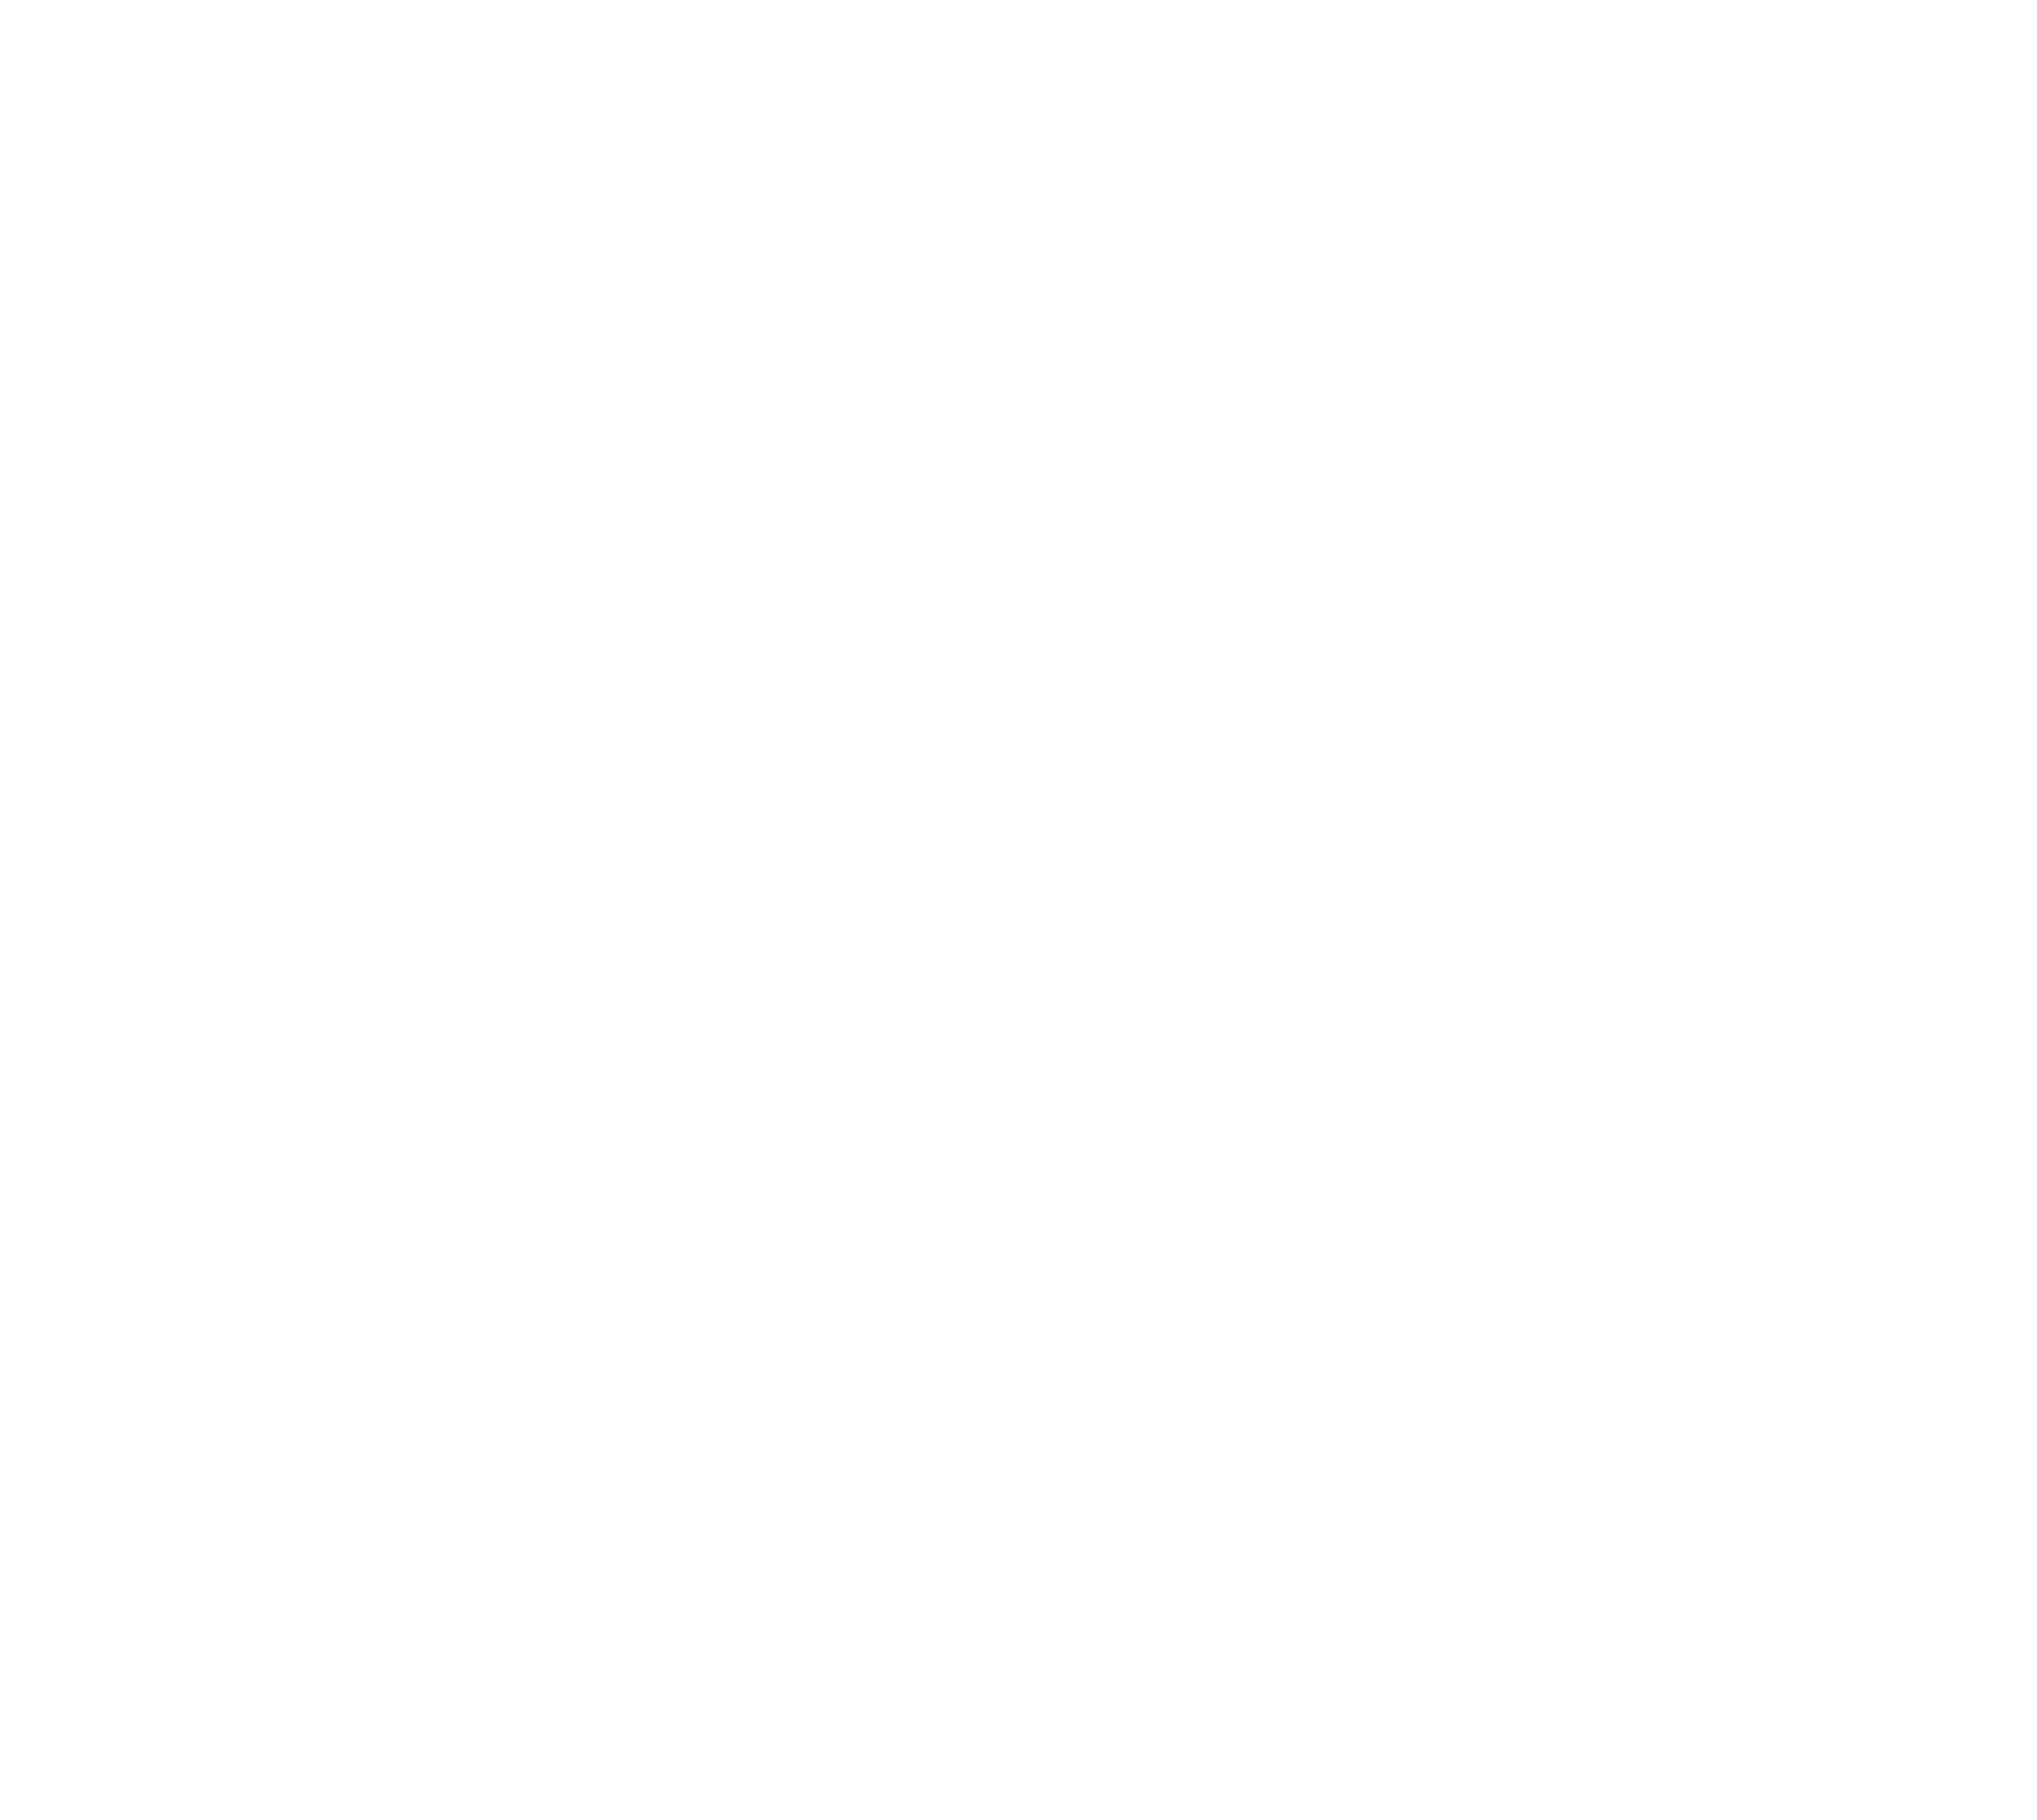 Foundation 45 Logo in WHite